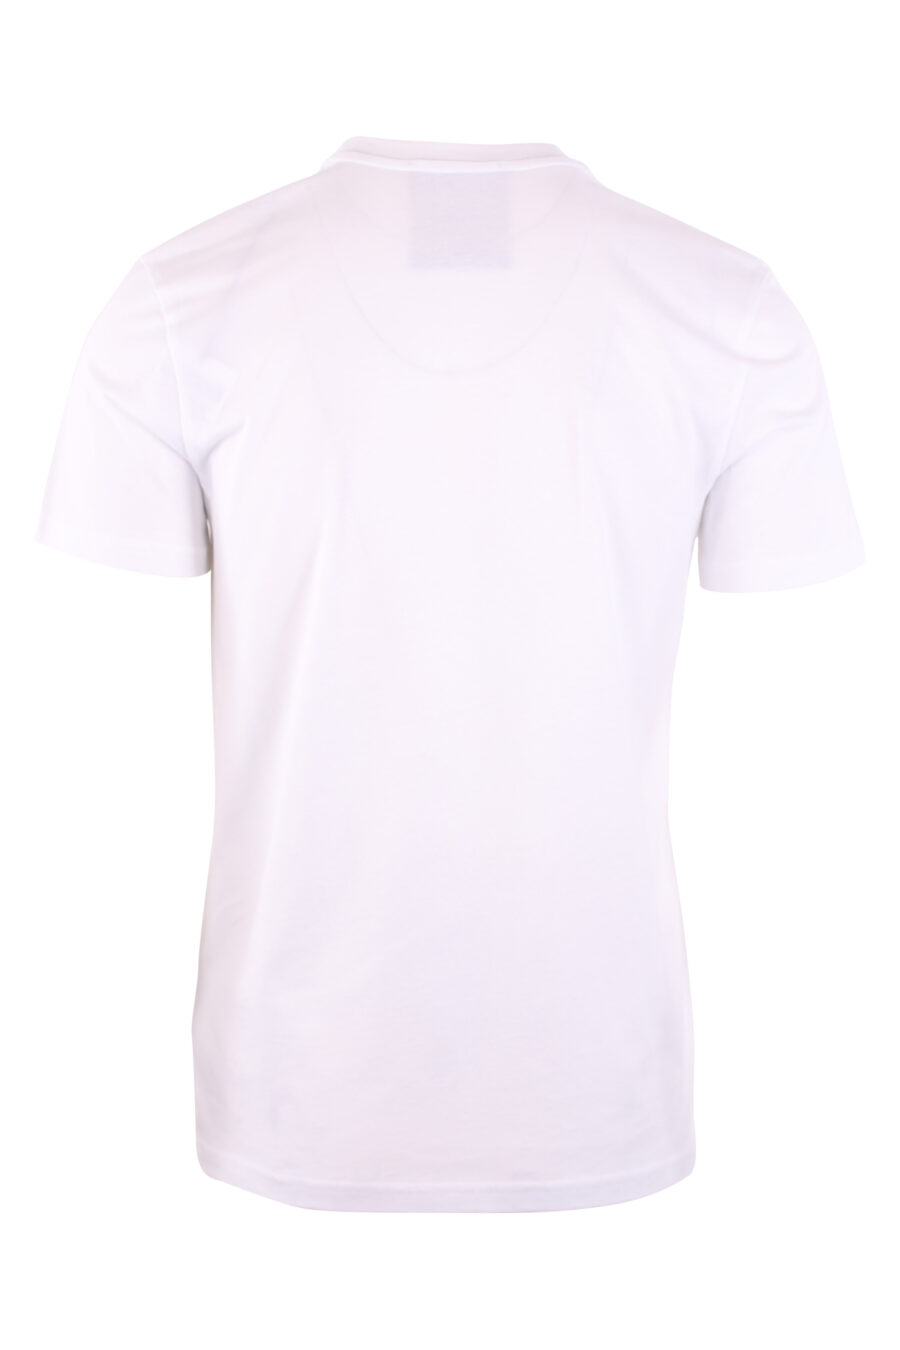 T-shirt blanc avec logo milano "fantasy" - IMG 3127